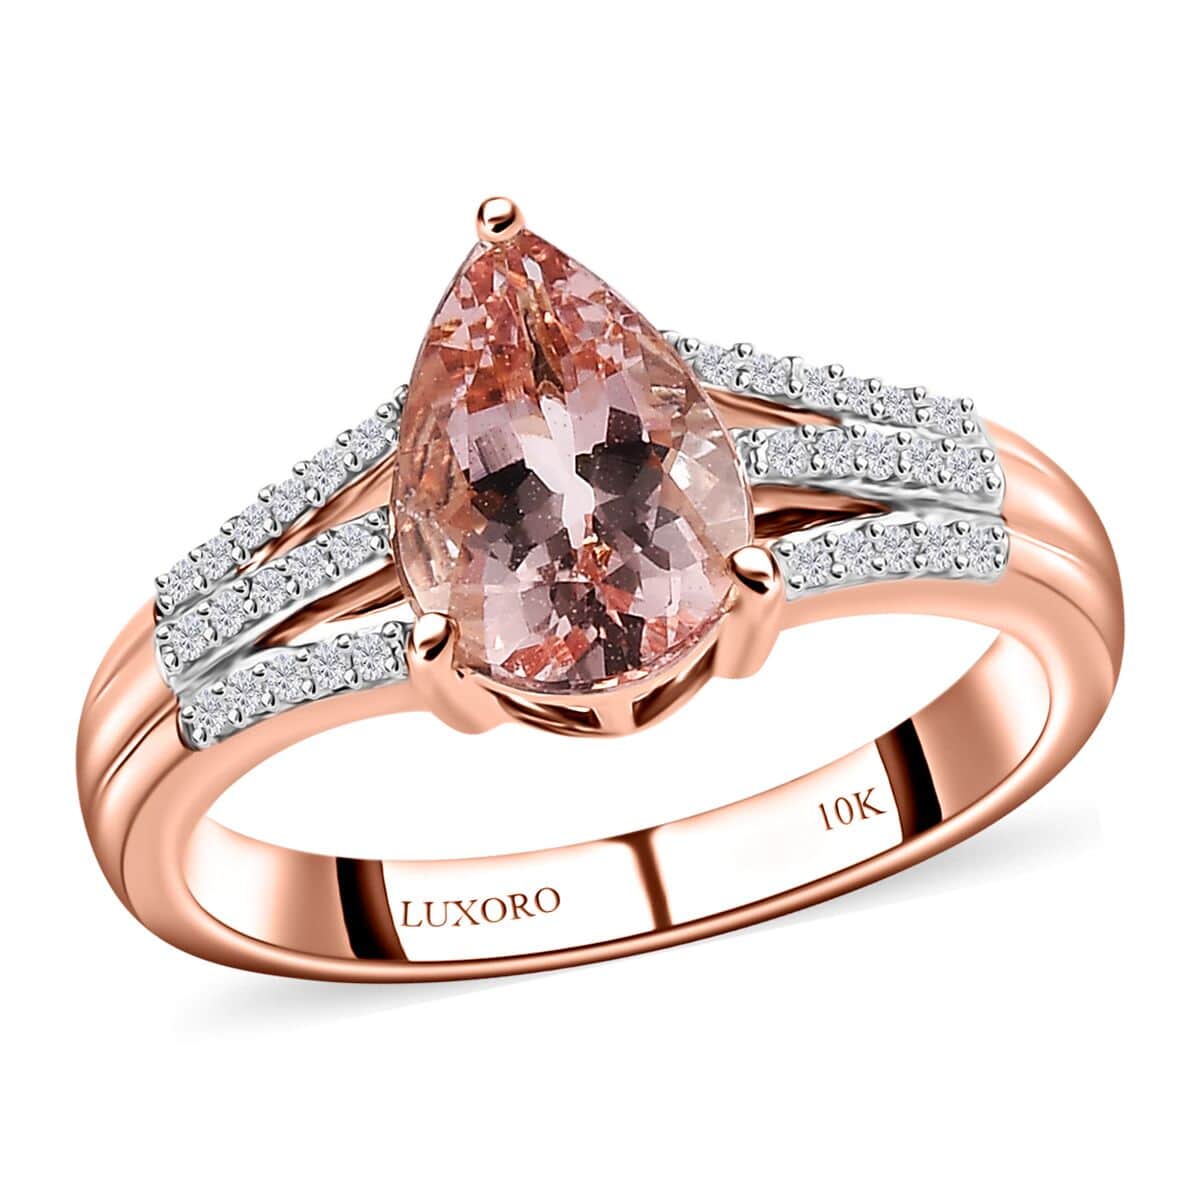 Luxoro 10K Rose Gold Premium Pink Morganite and Diamond Ring (Size 7.0) 1.75 ctw image number 0